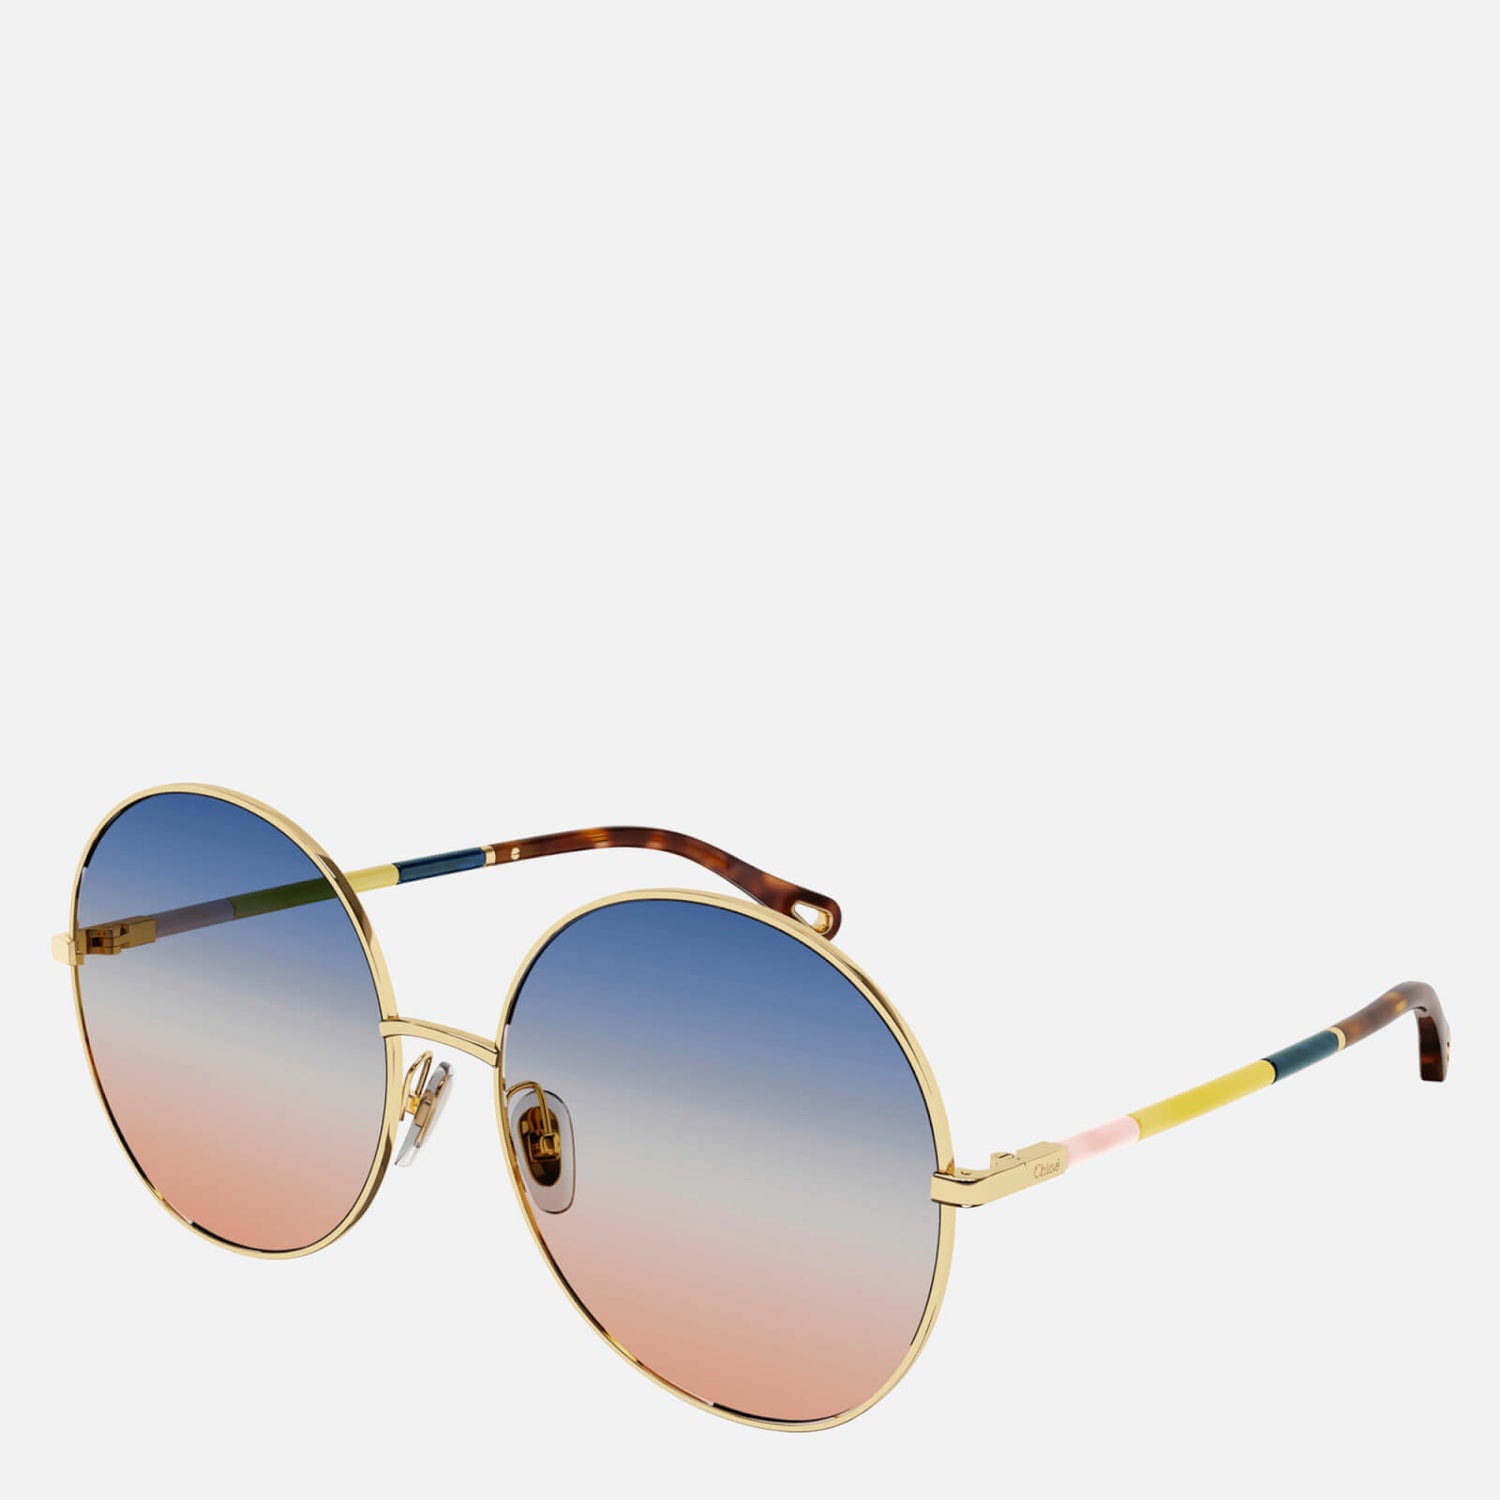 Chloé Women's Round Frame Sunglasses - Gold/Multicolor